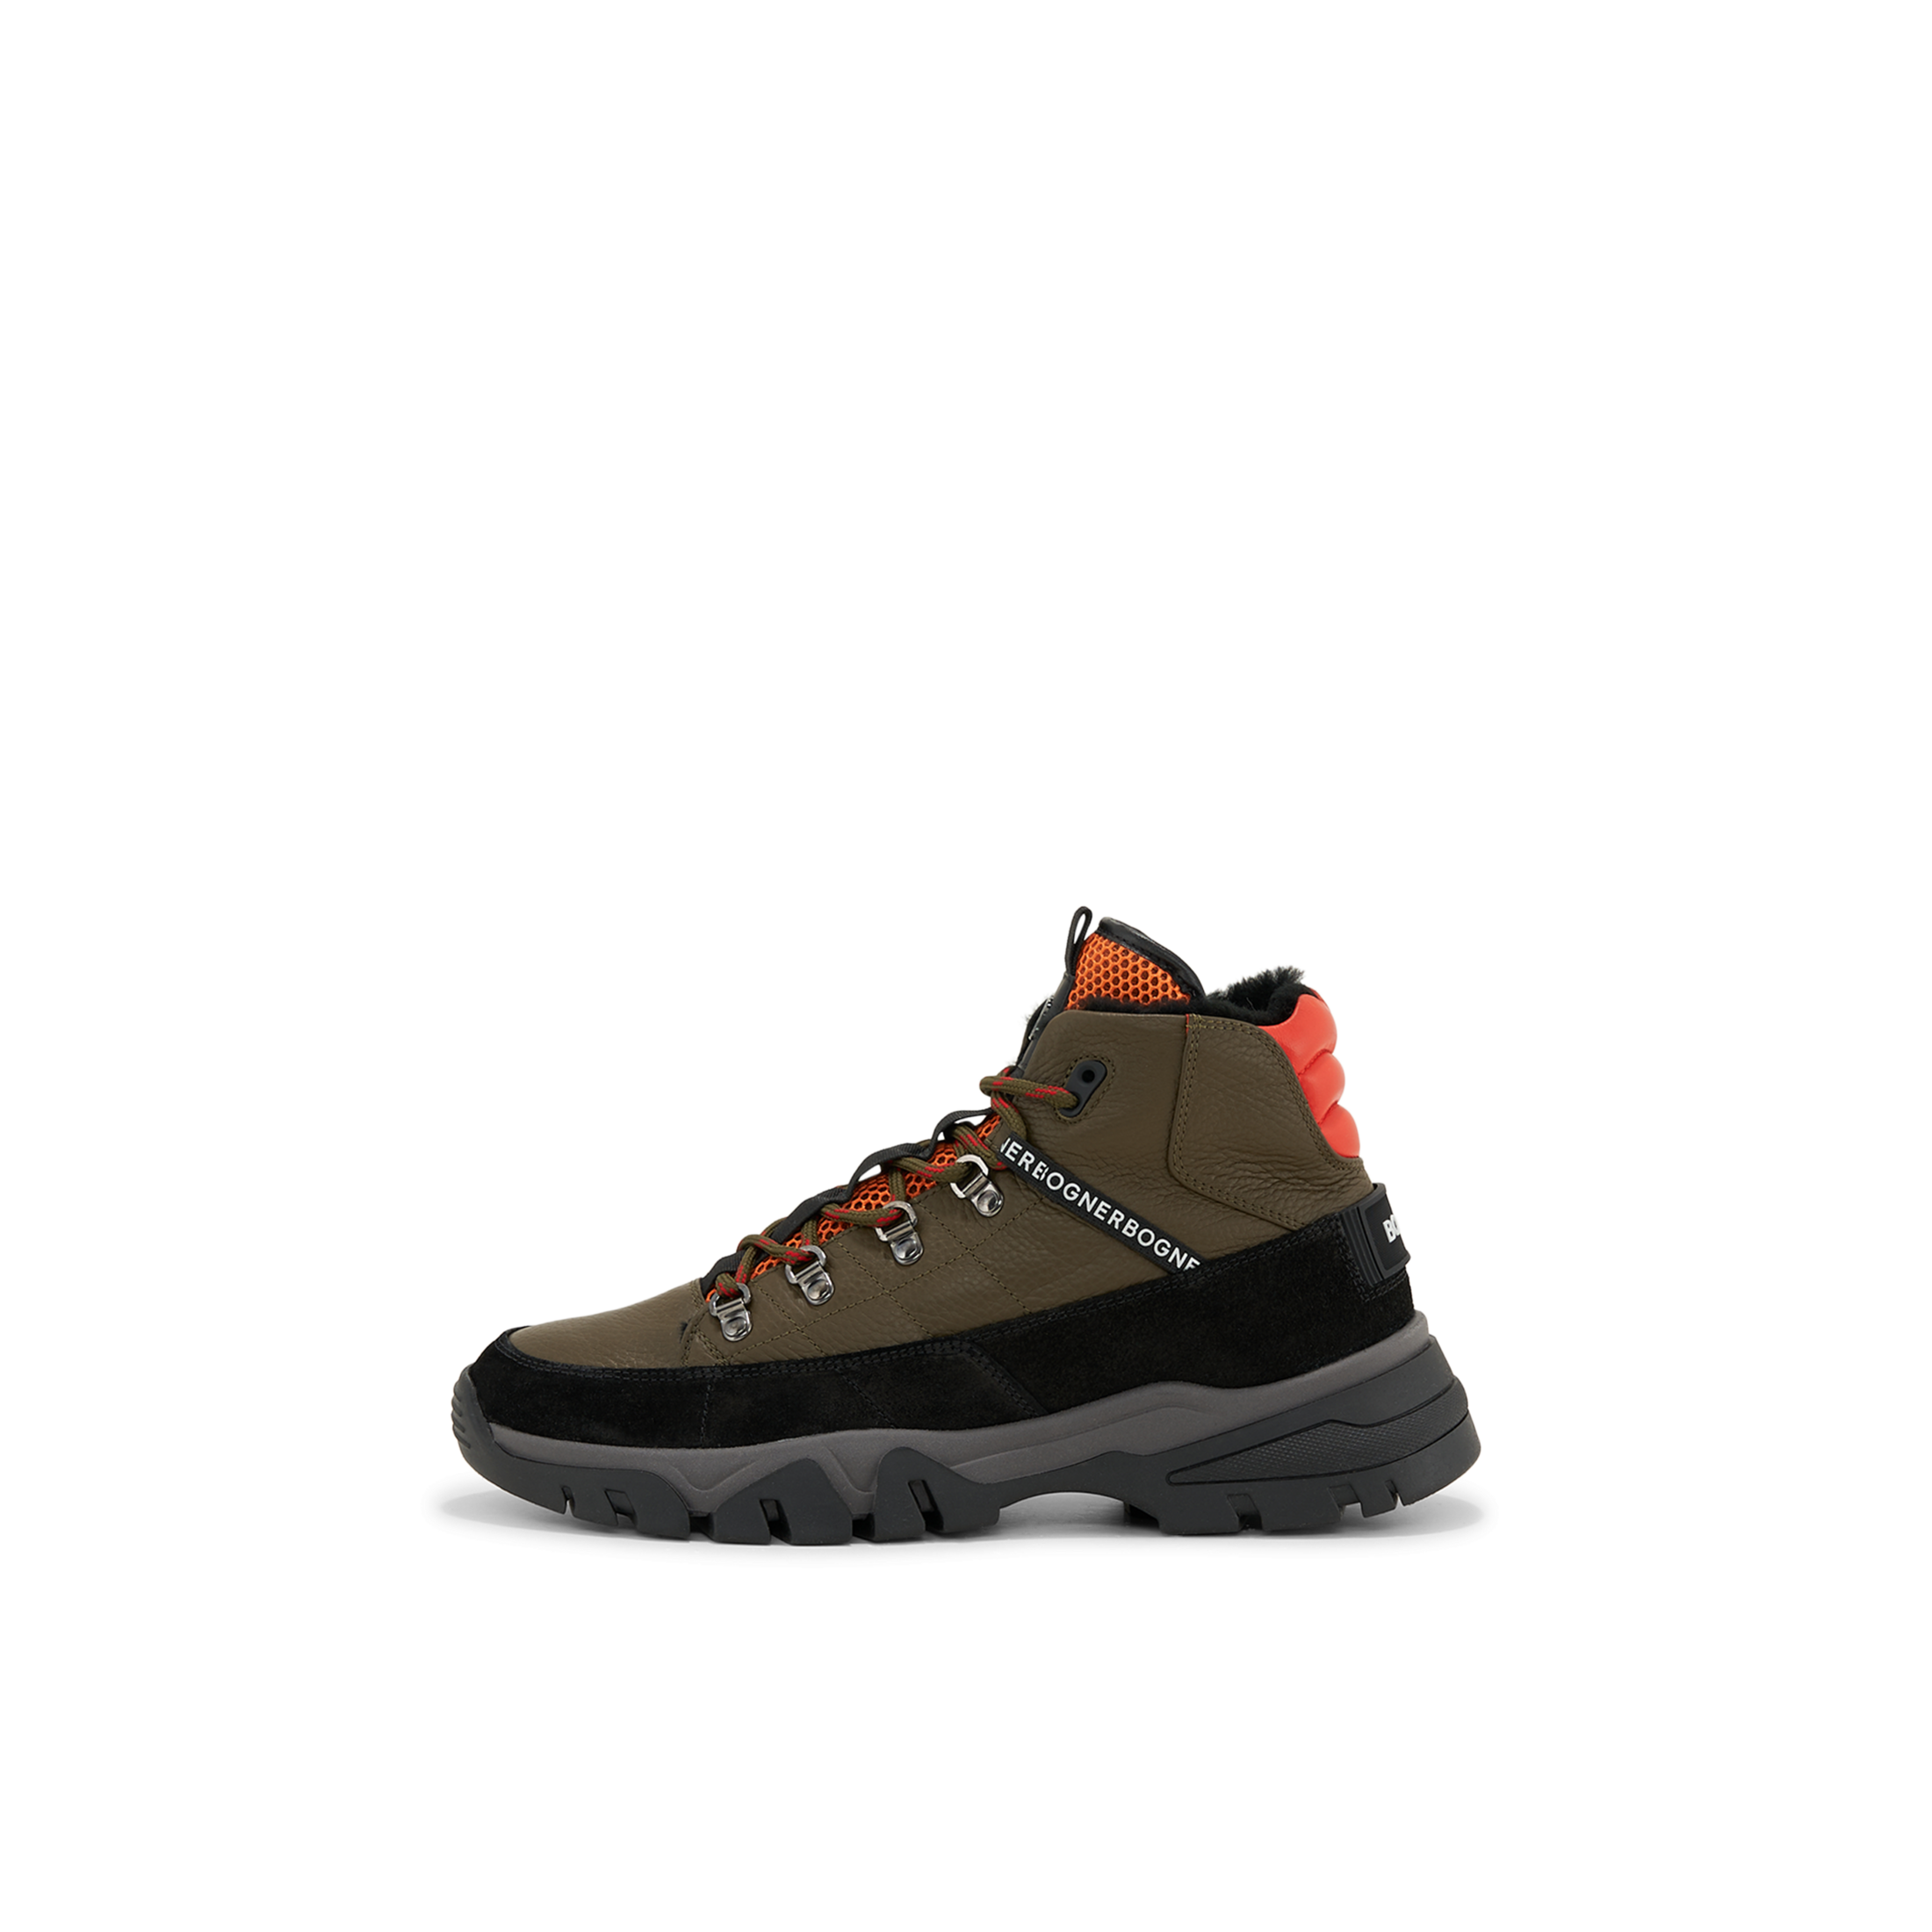 BOGNER Copper Mountain low boot sneakers for men - Black/Olive - US 13